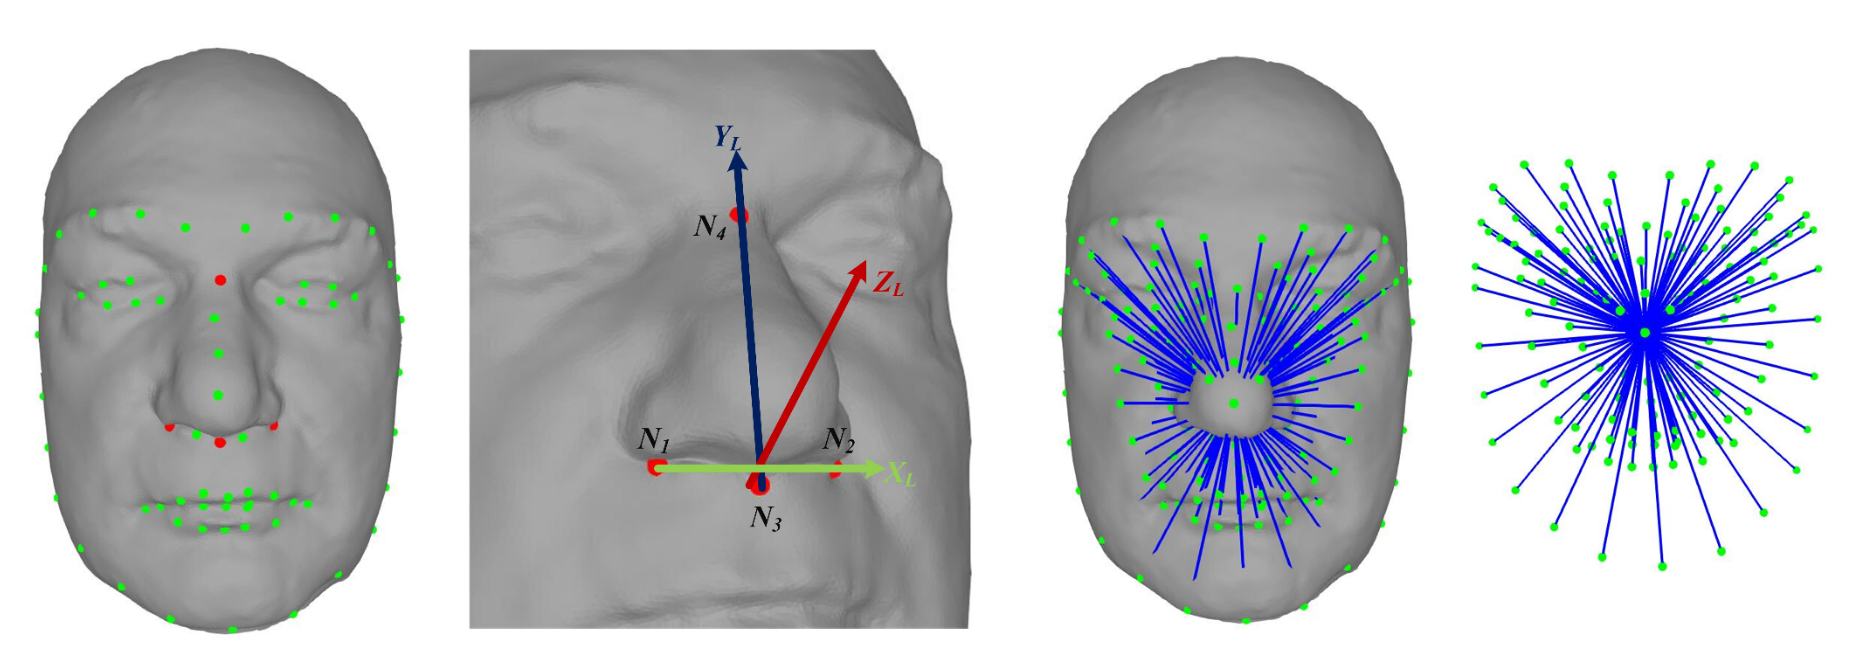 3D Facial Similarity Measurement and Its Application in Facial Organization